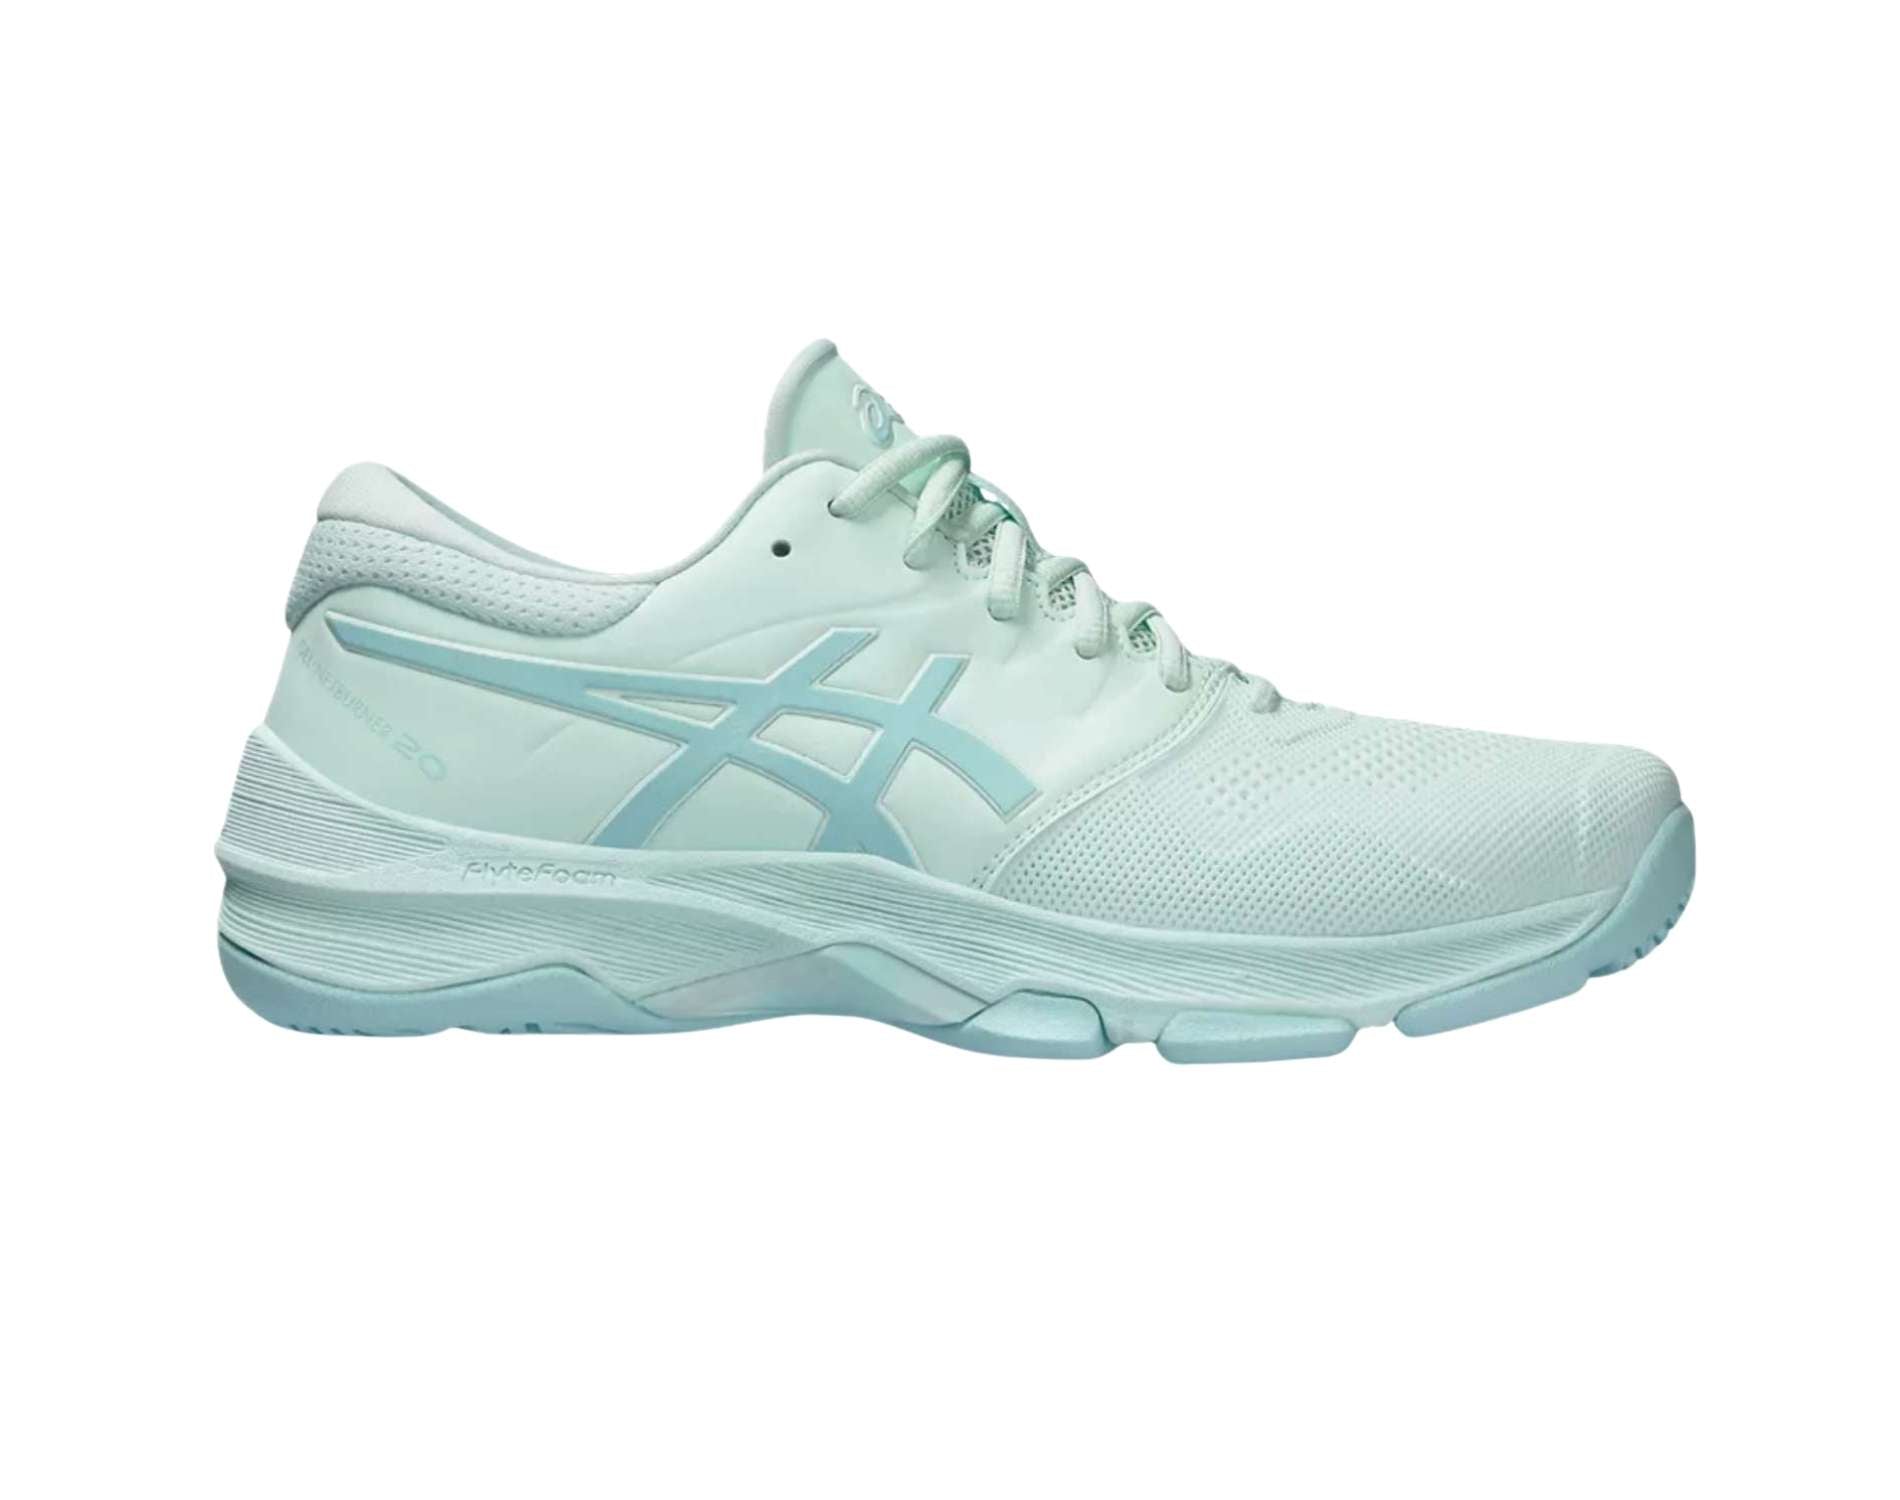 Asics Netburner 20 womens netball shoe in b standard width in soothing sea aquamarine colour